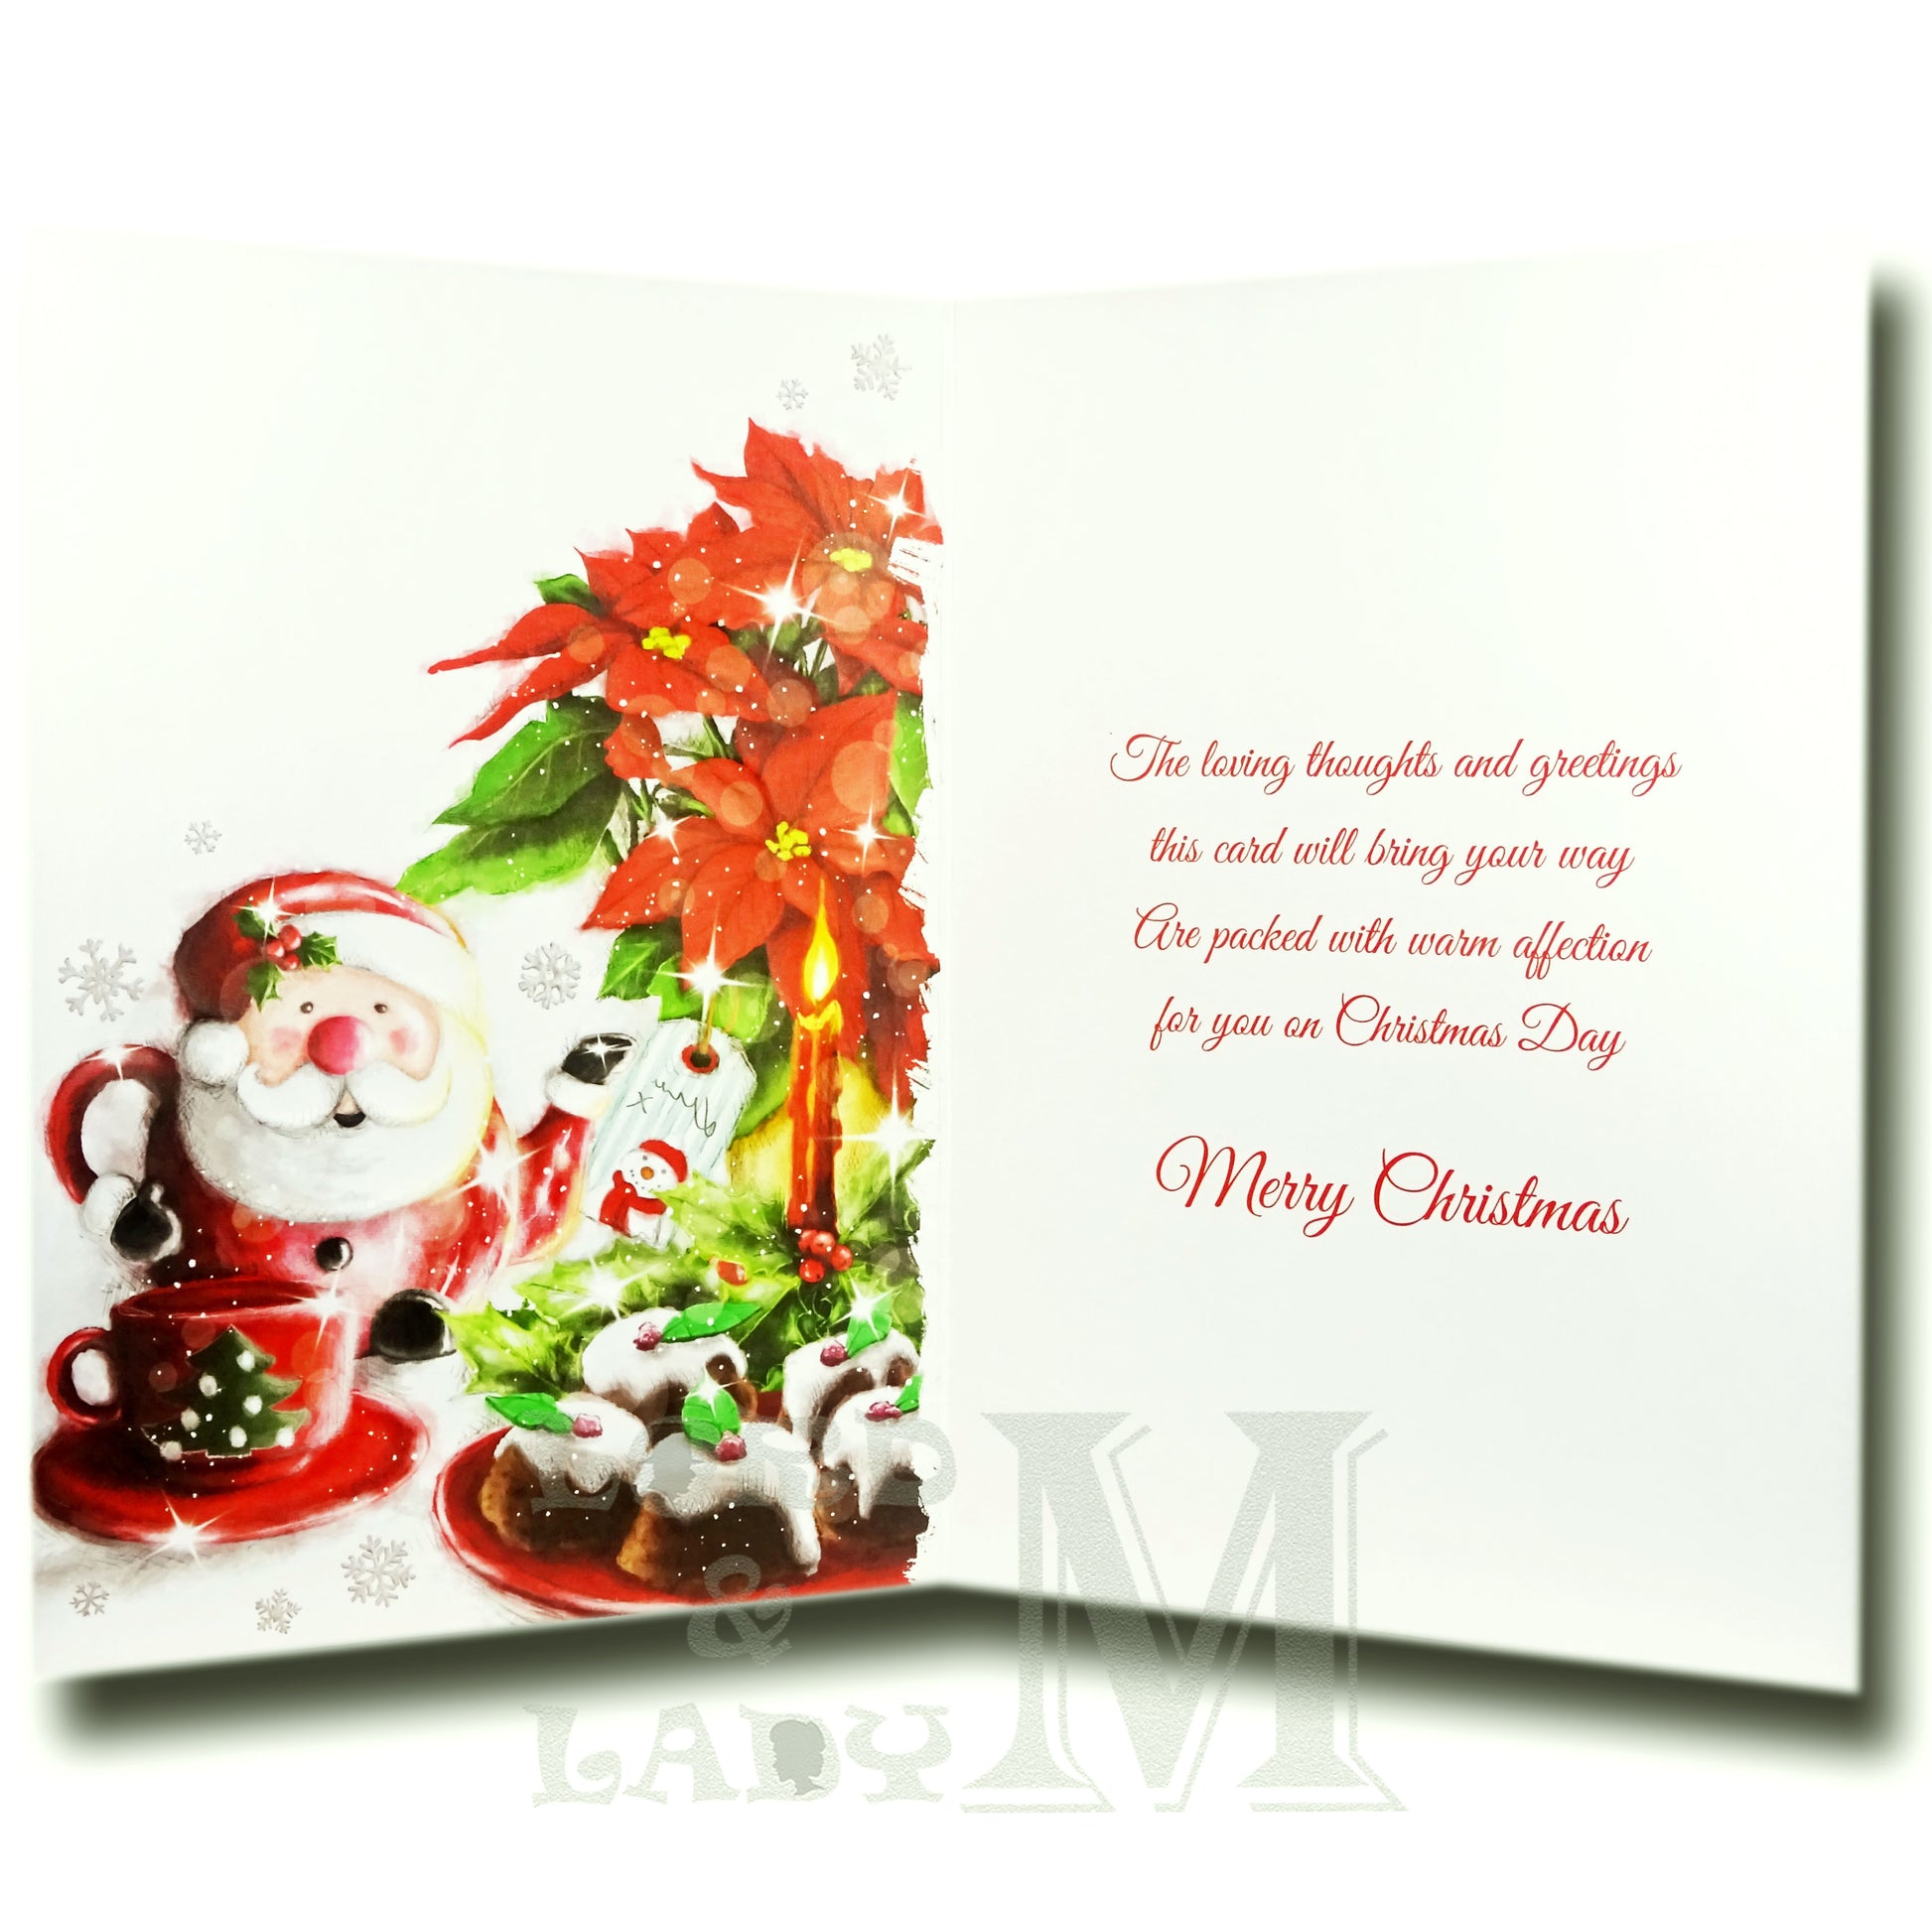 19cm - Christmas Wishes Mum & Partner - GH